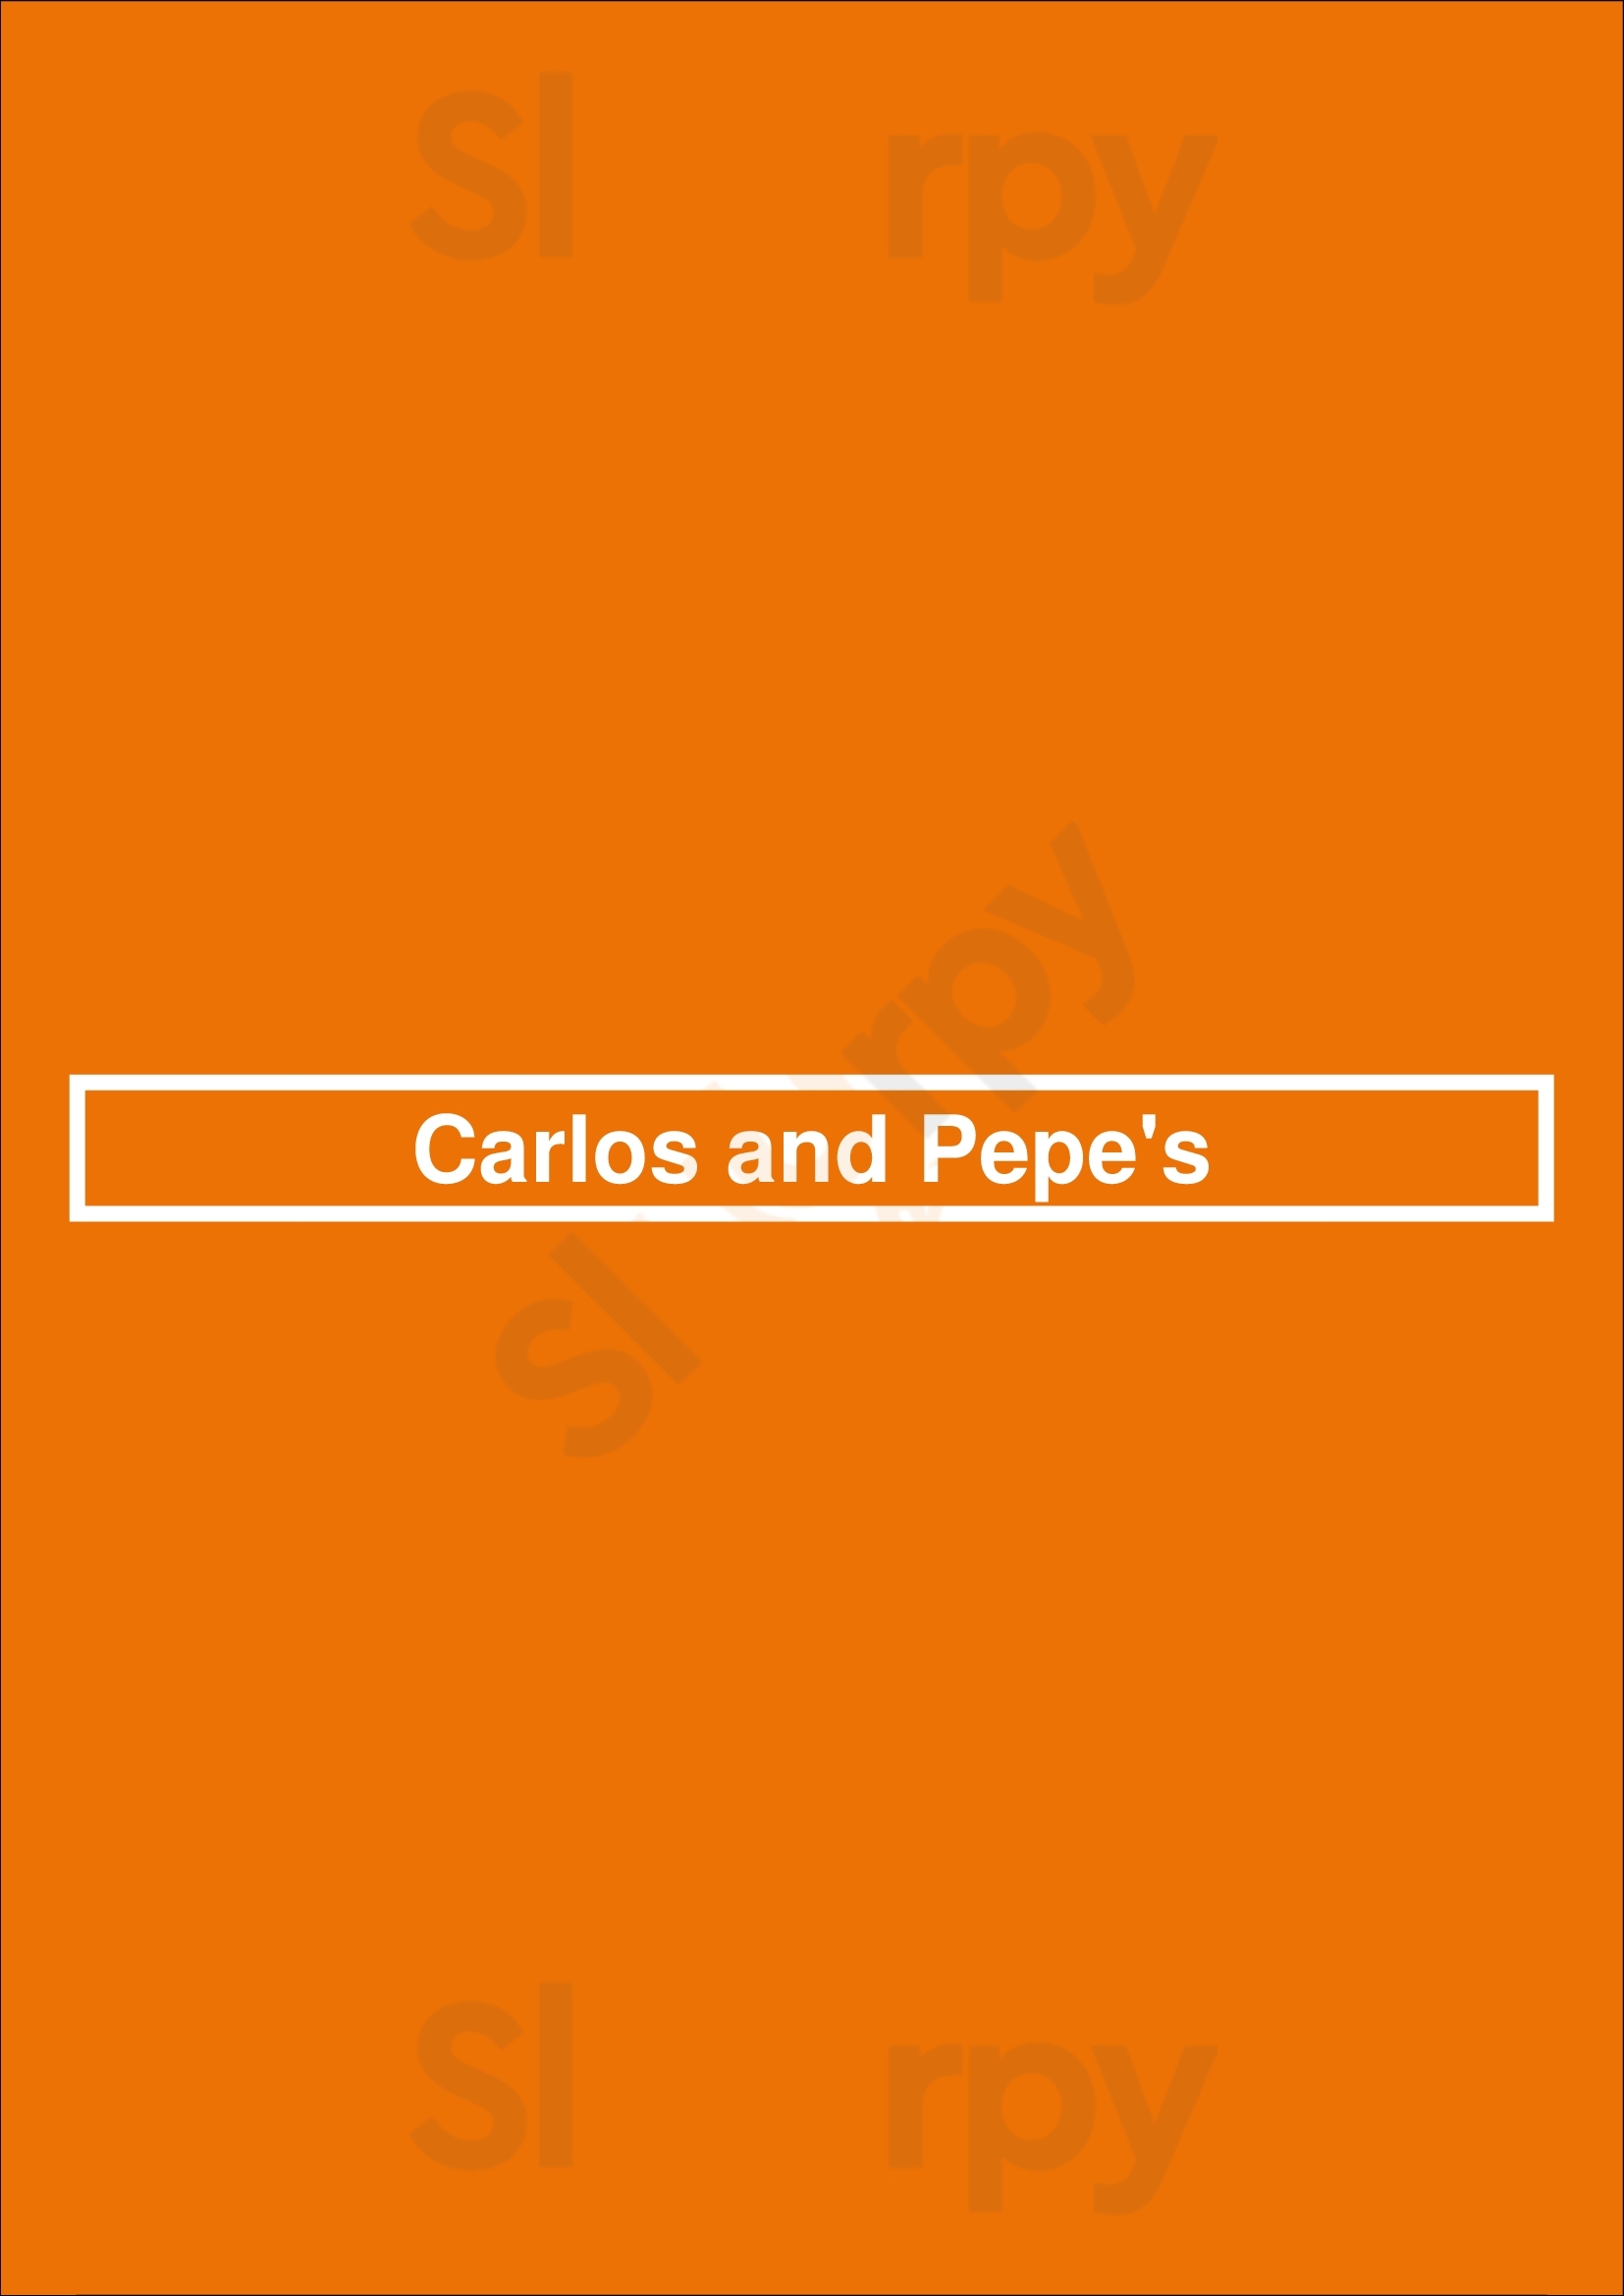 Carlos And Pepe's Montreal Menu - 1